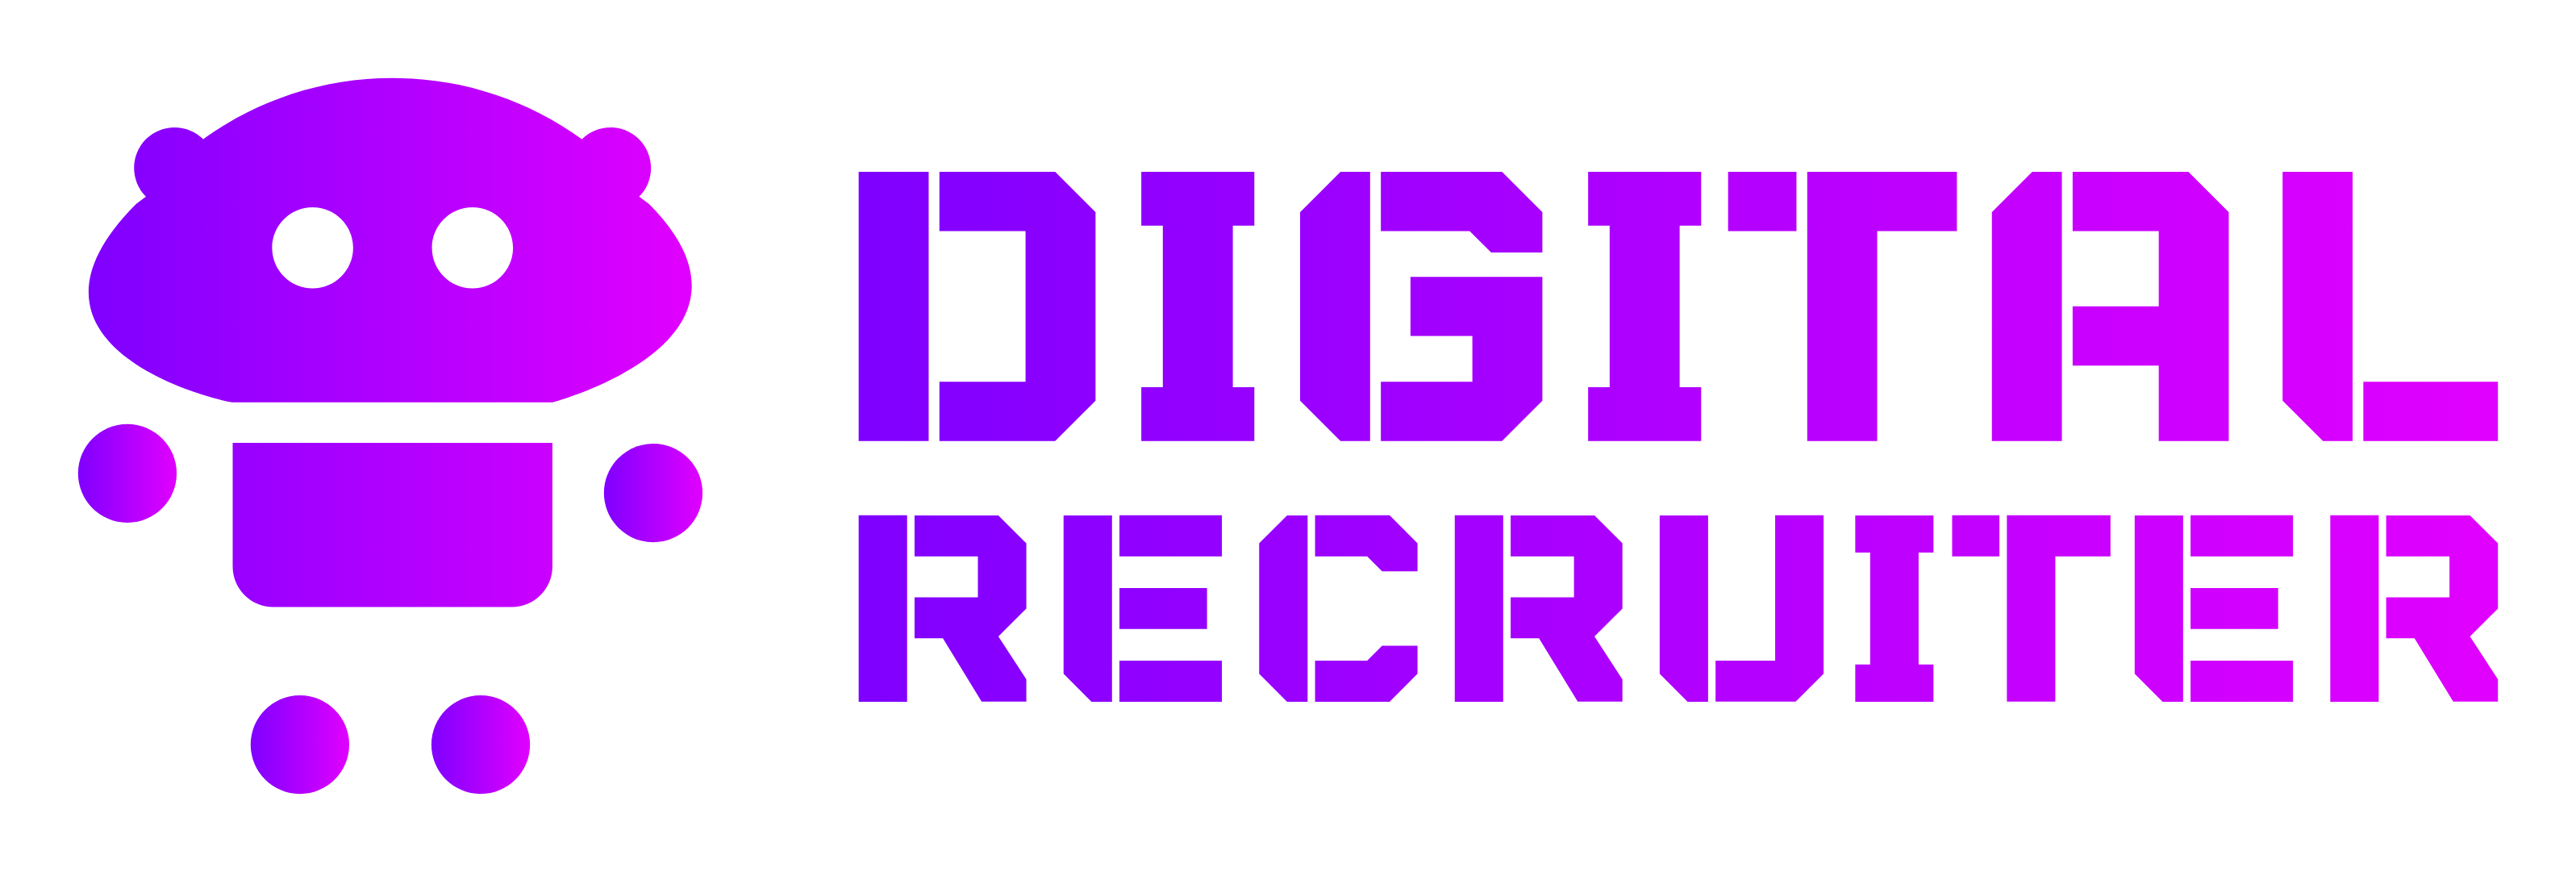 Digital Recruiter Logo by Mafost Marketing